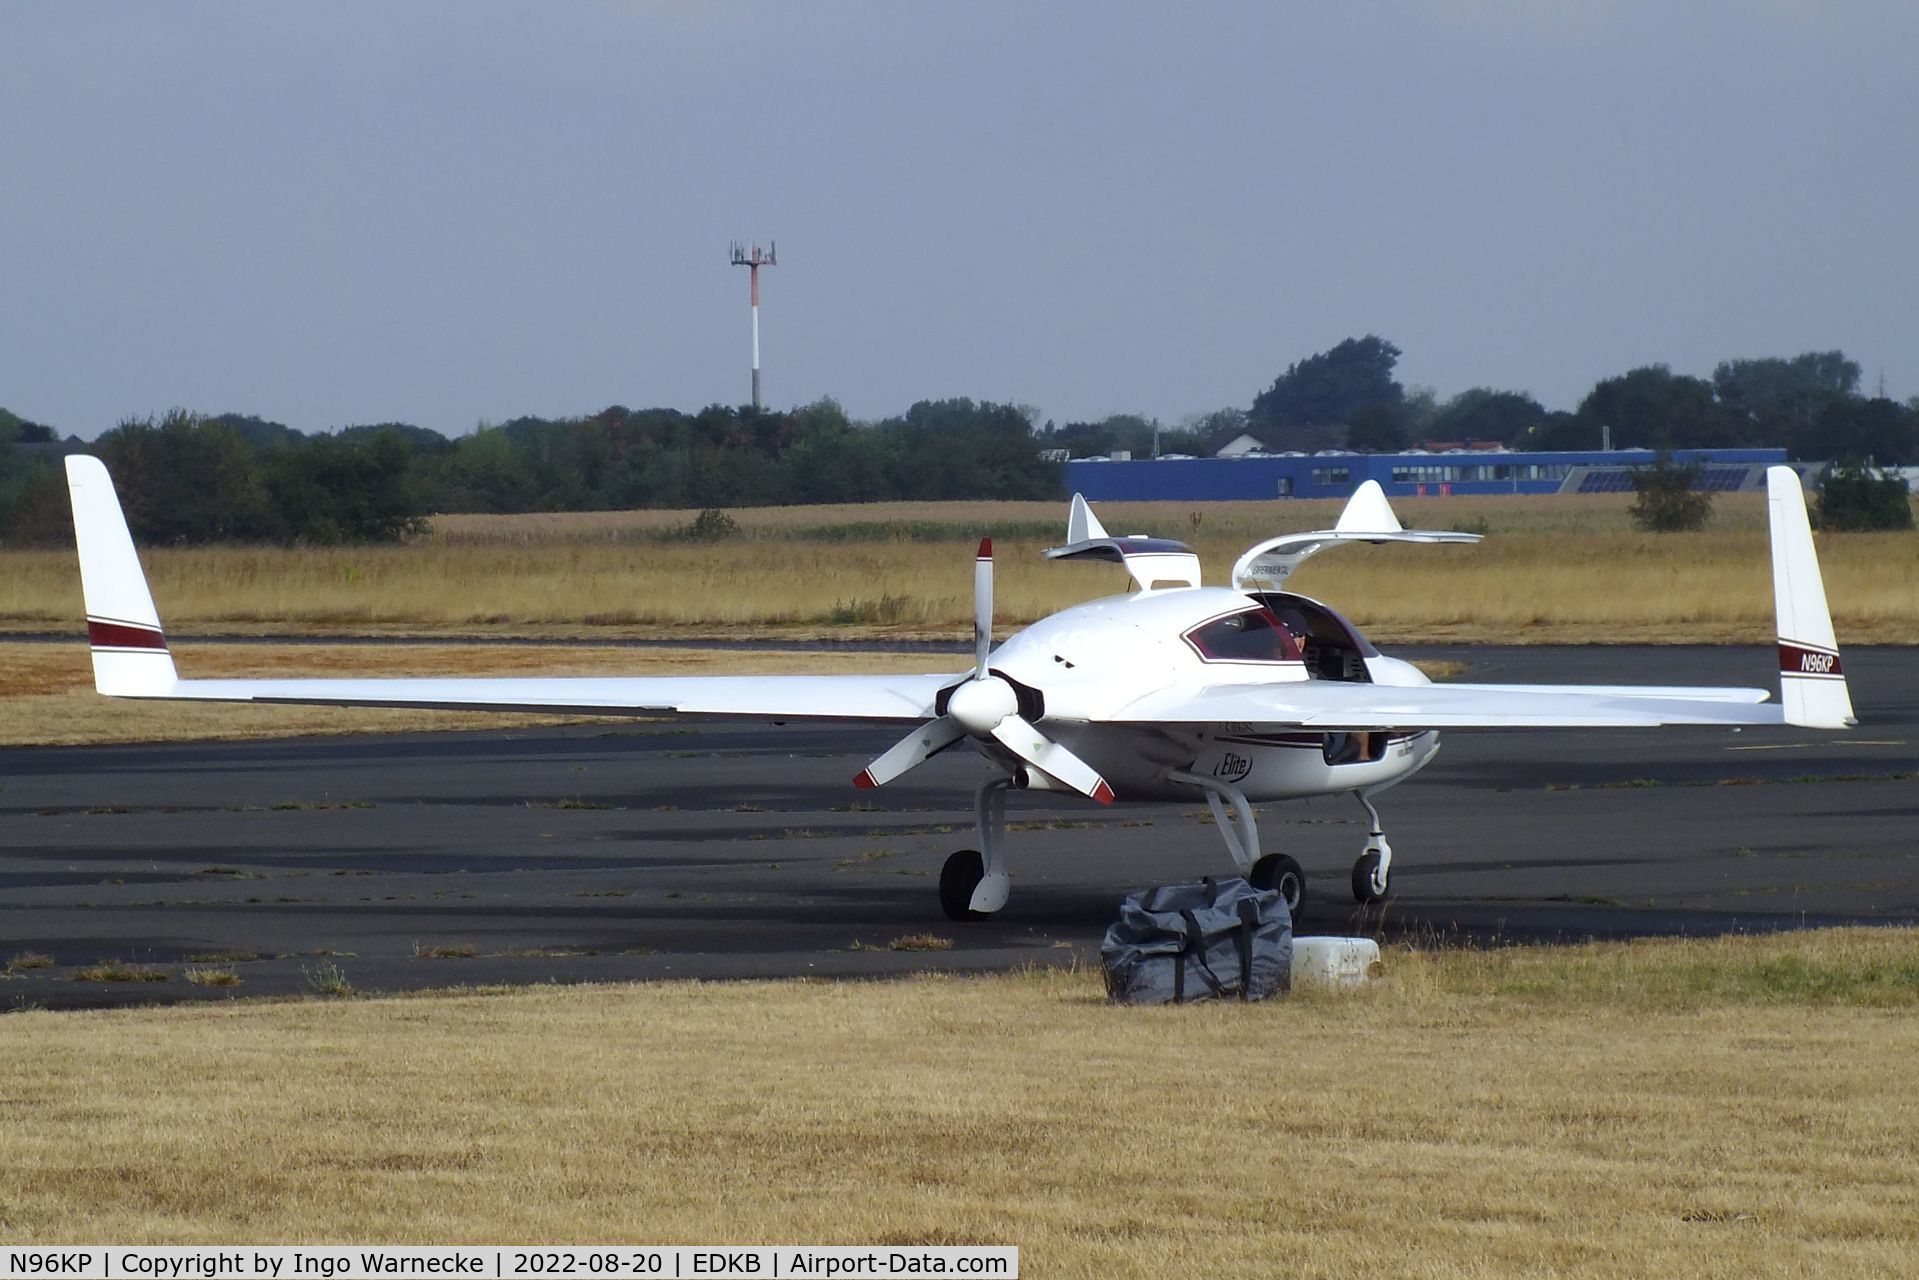 N96KP, 1996 Velocity Velocity  RG 173 C/N DMO325, Velocity SE RG 173 at Bonn-Hangelar airfield during the Grumman Fly-in 2022